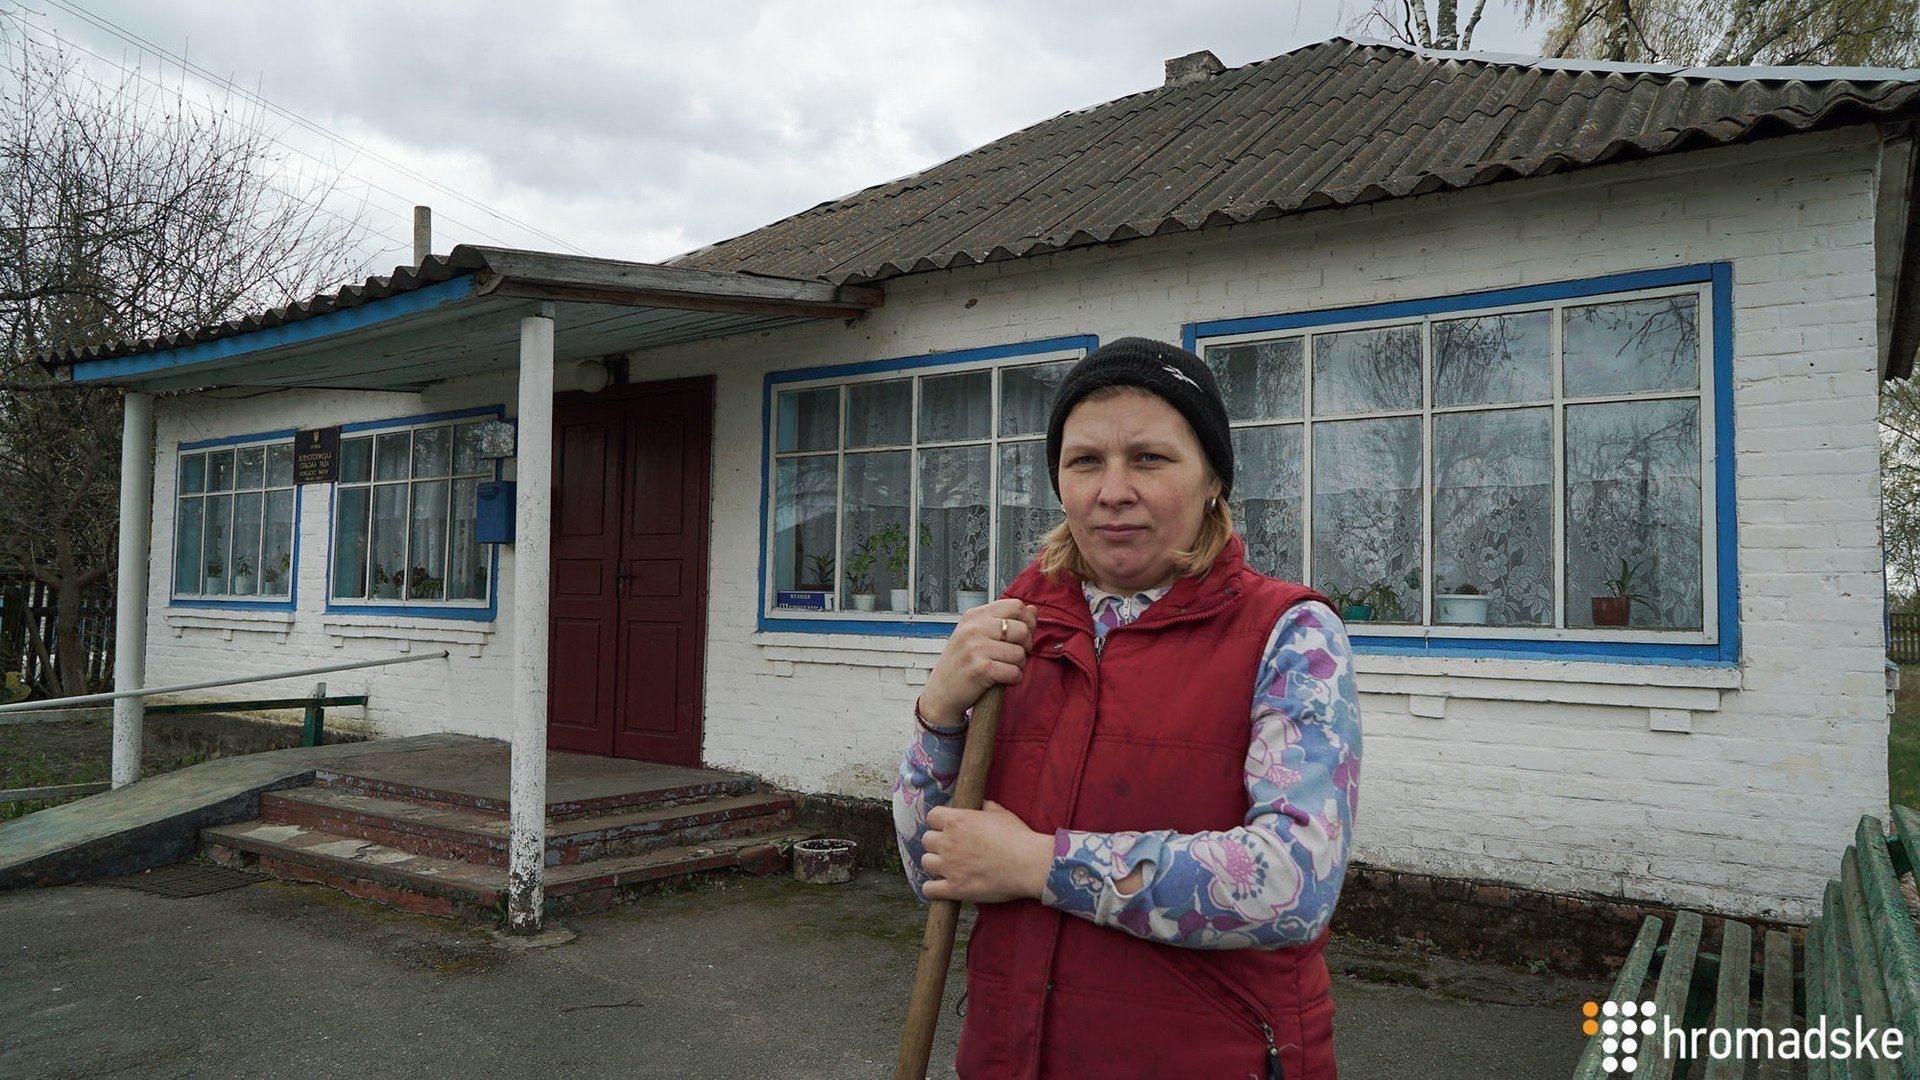 Zelenaya Polyana kənd sovetinin sədri Yekaterina Vitkovskaya, Polesye rayonu, Kiyev bölgəsi